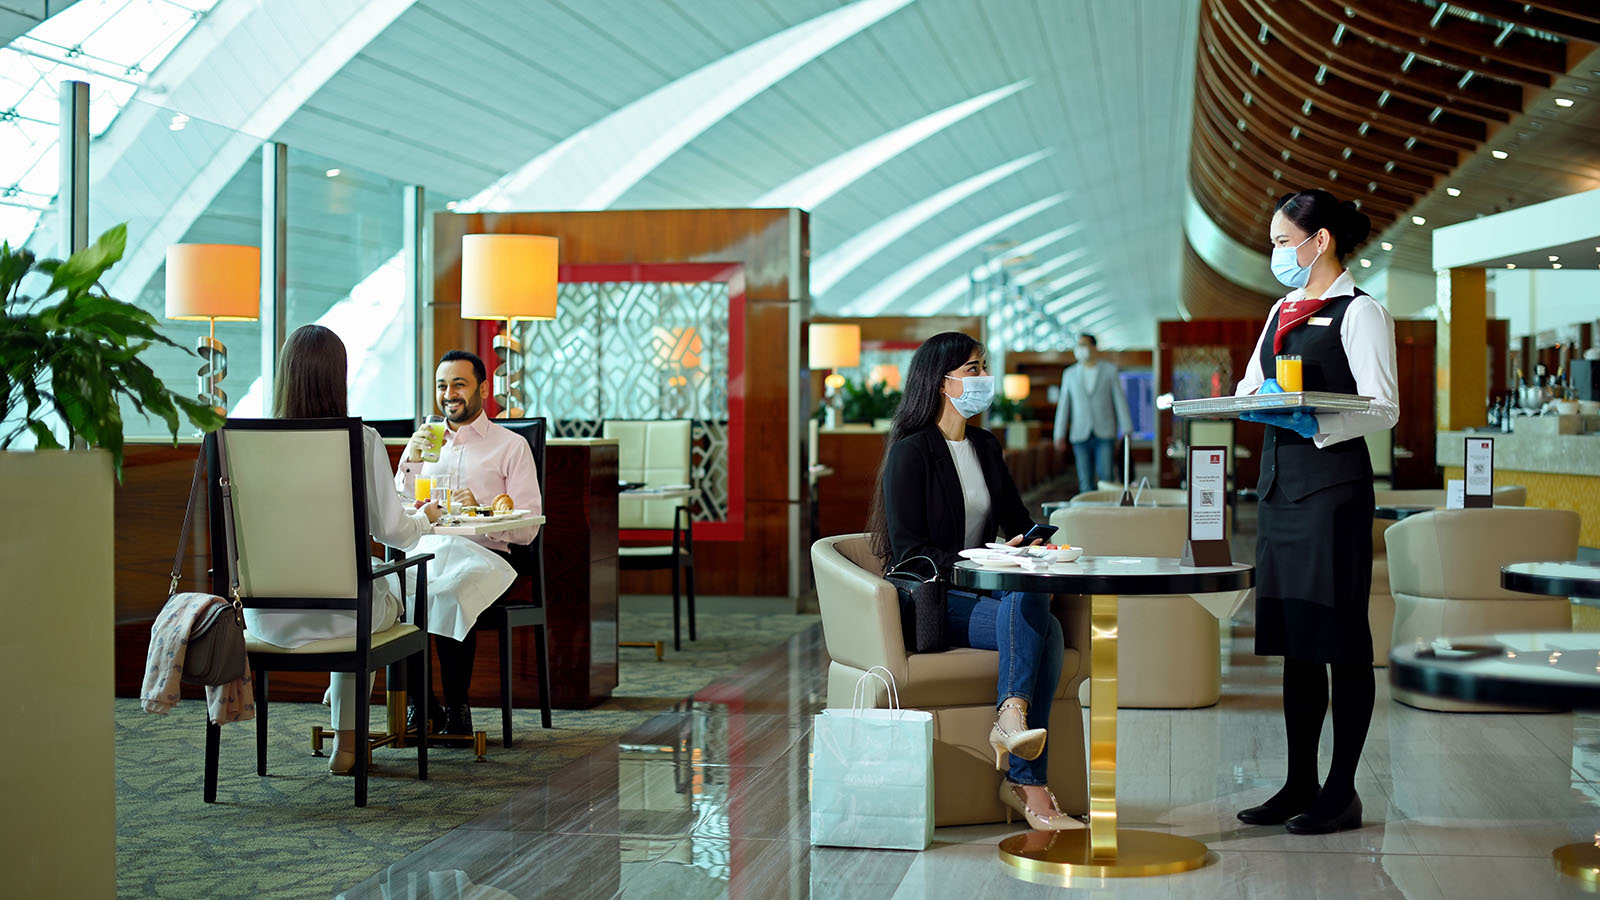 Emirates Business Class lounge, Dubai - open to Qantas